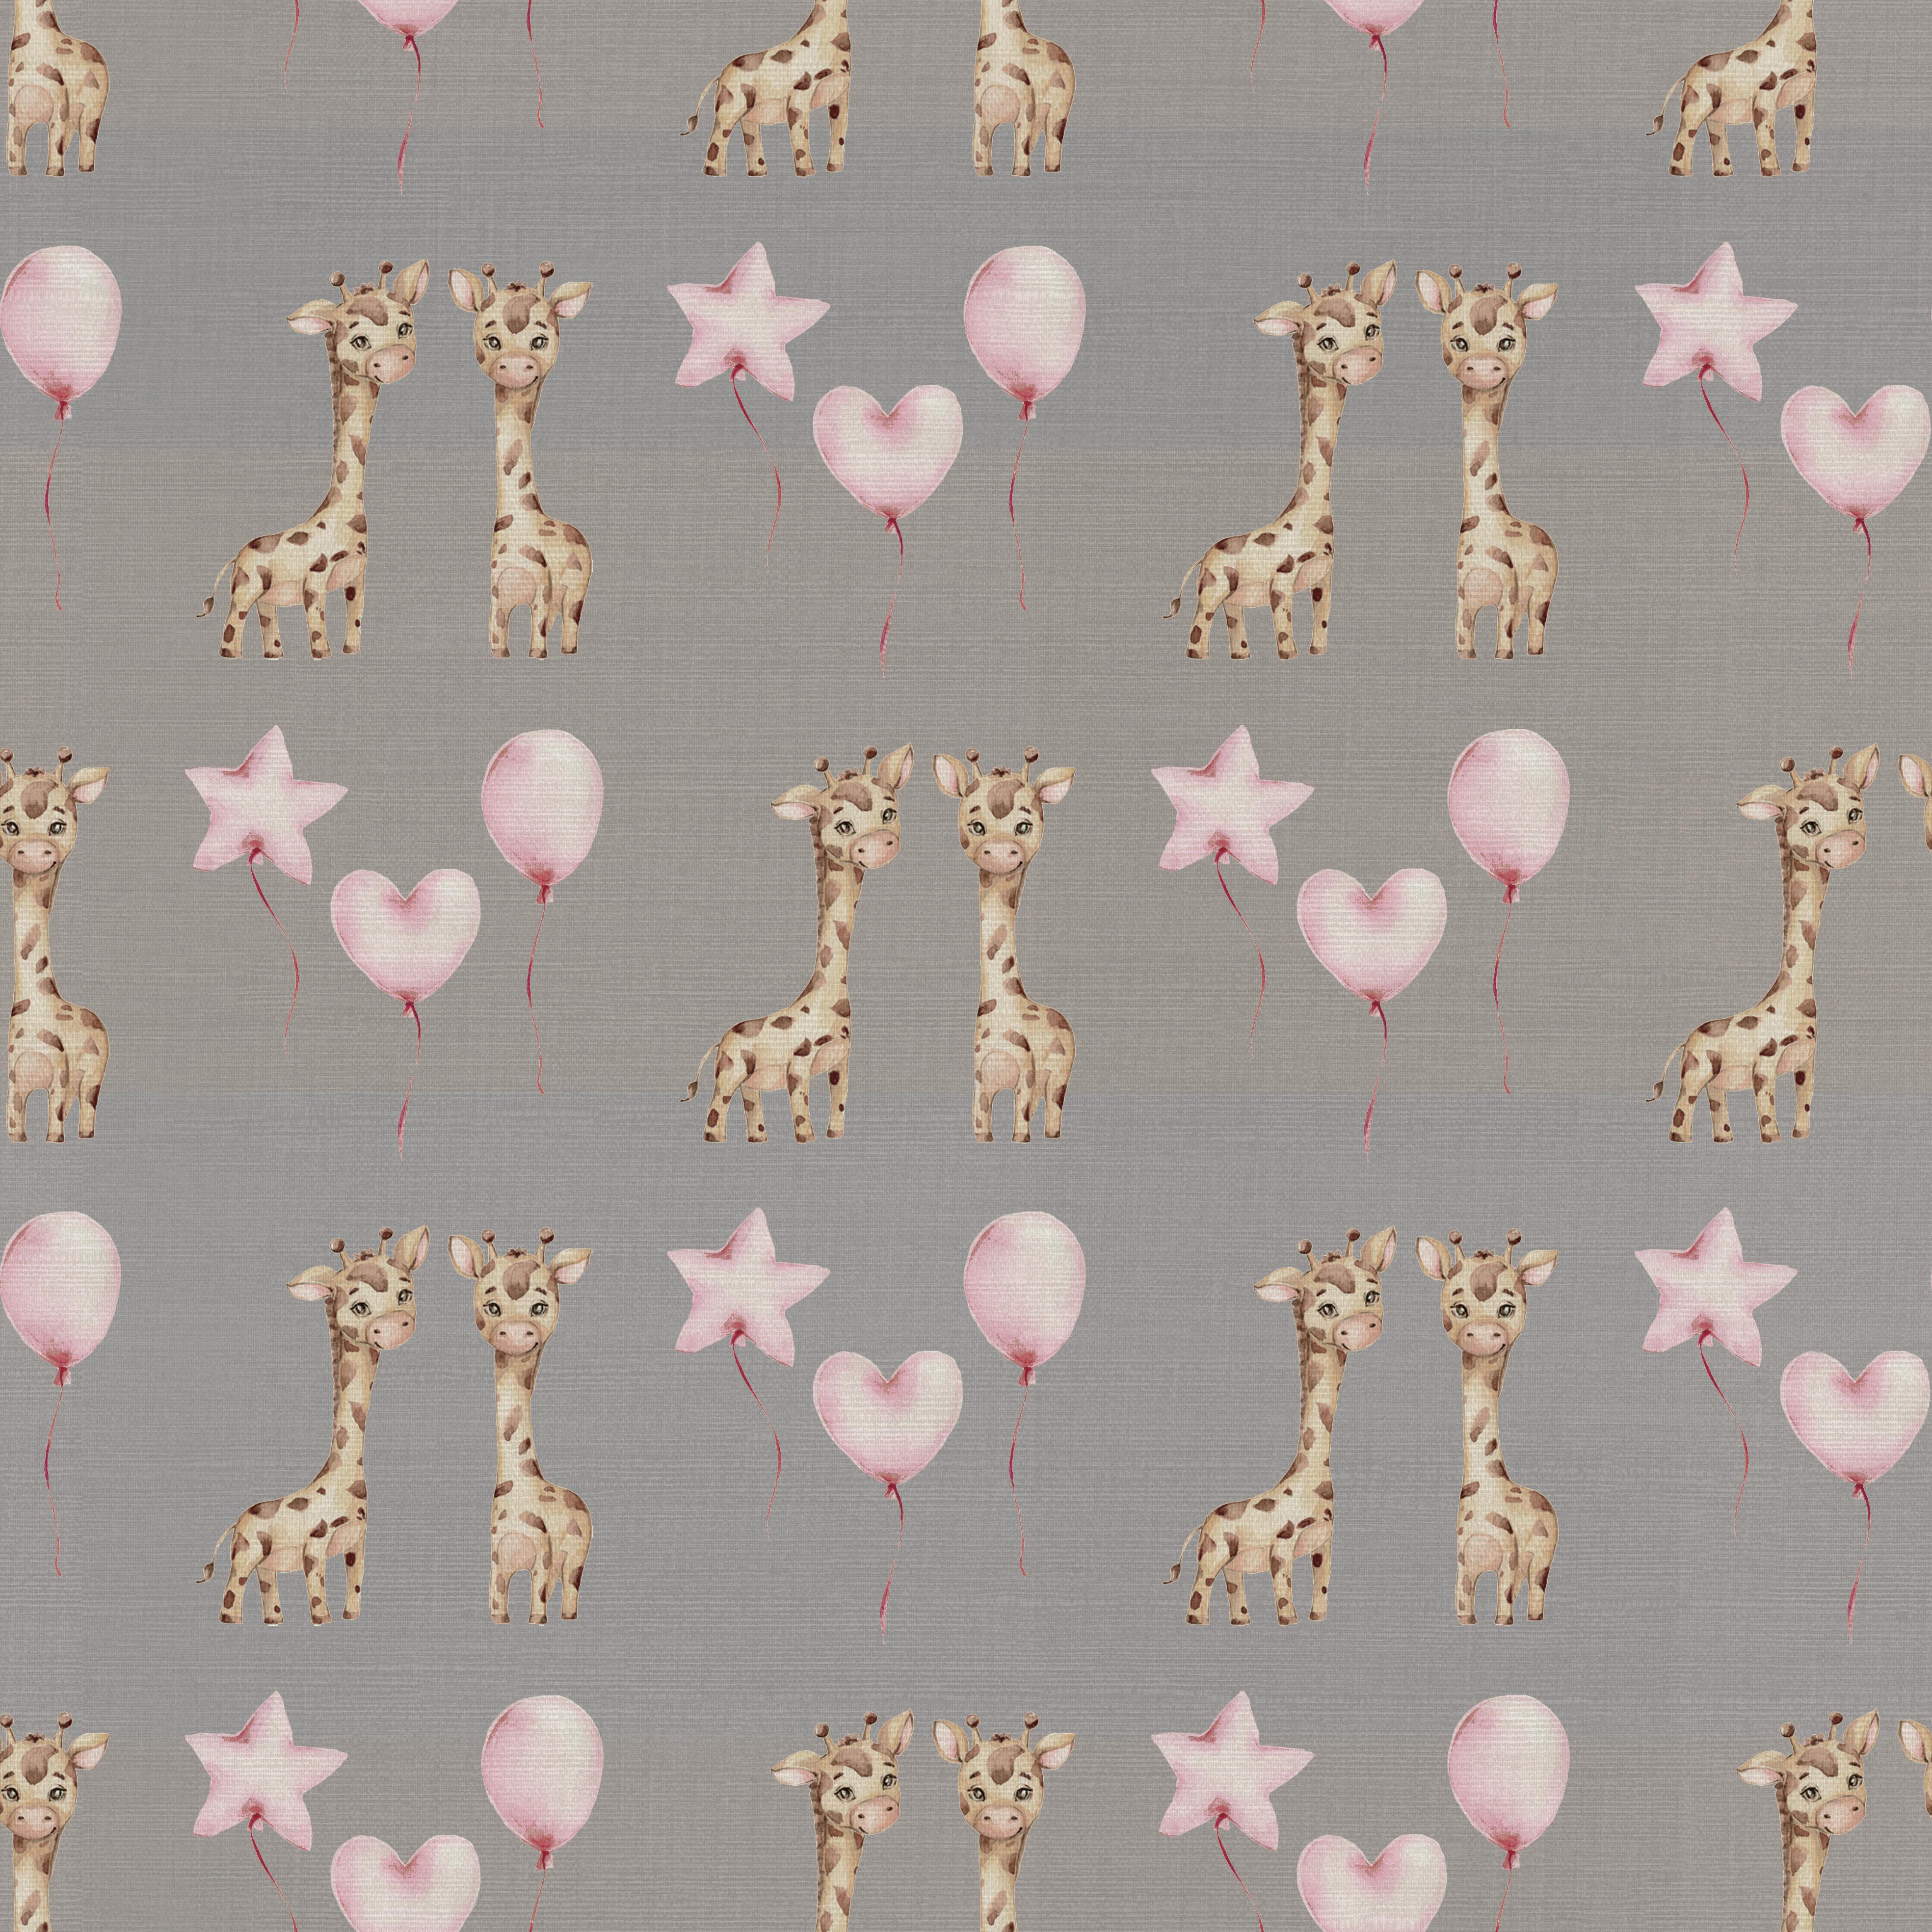 Contemporary Ornami Children Stars Giraffes Vinyl Wallpaper Made in Italy Digital Printing For Sale